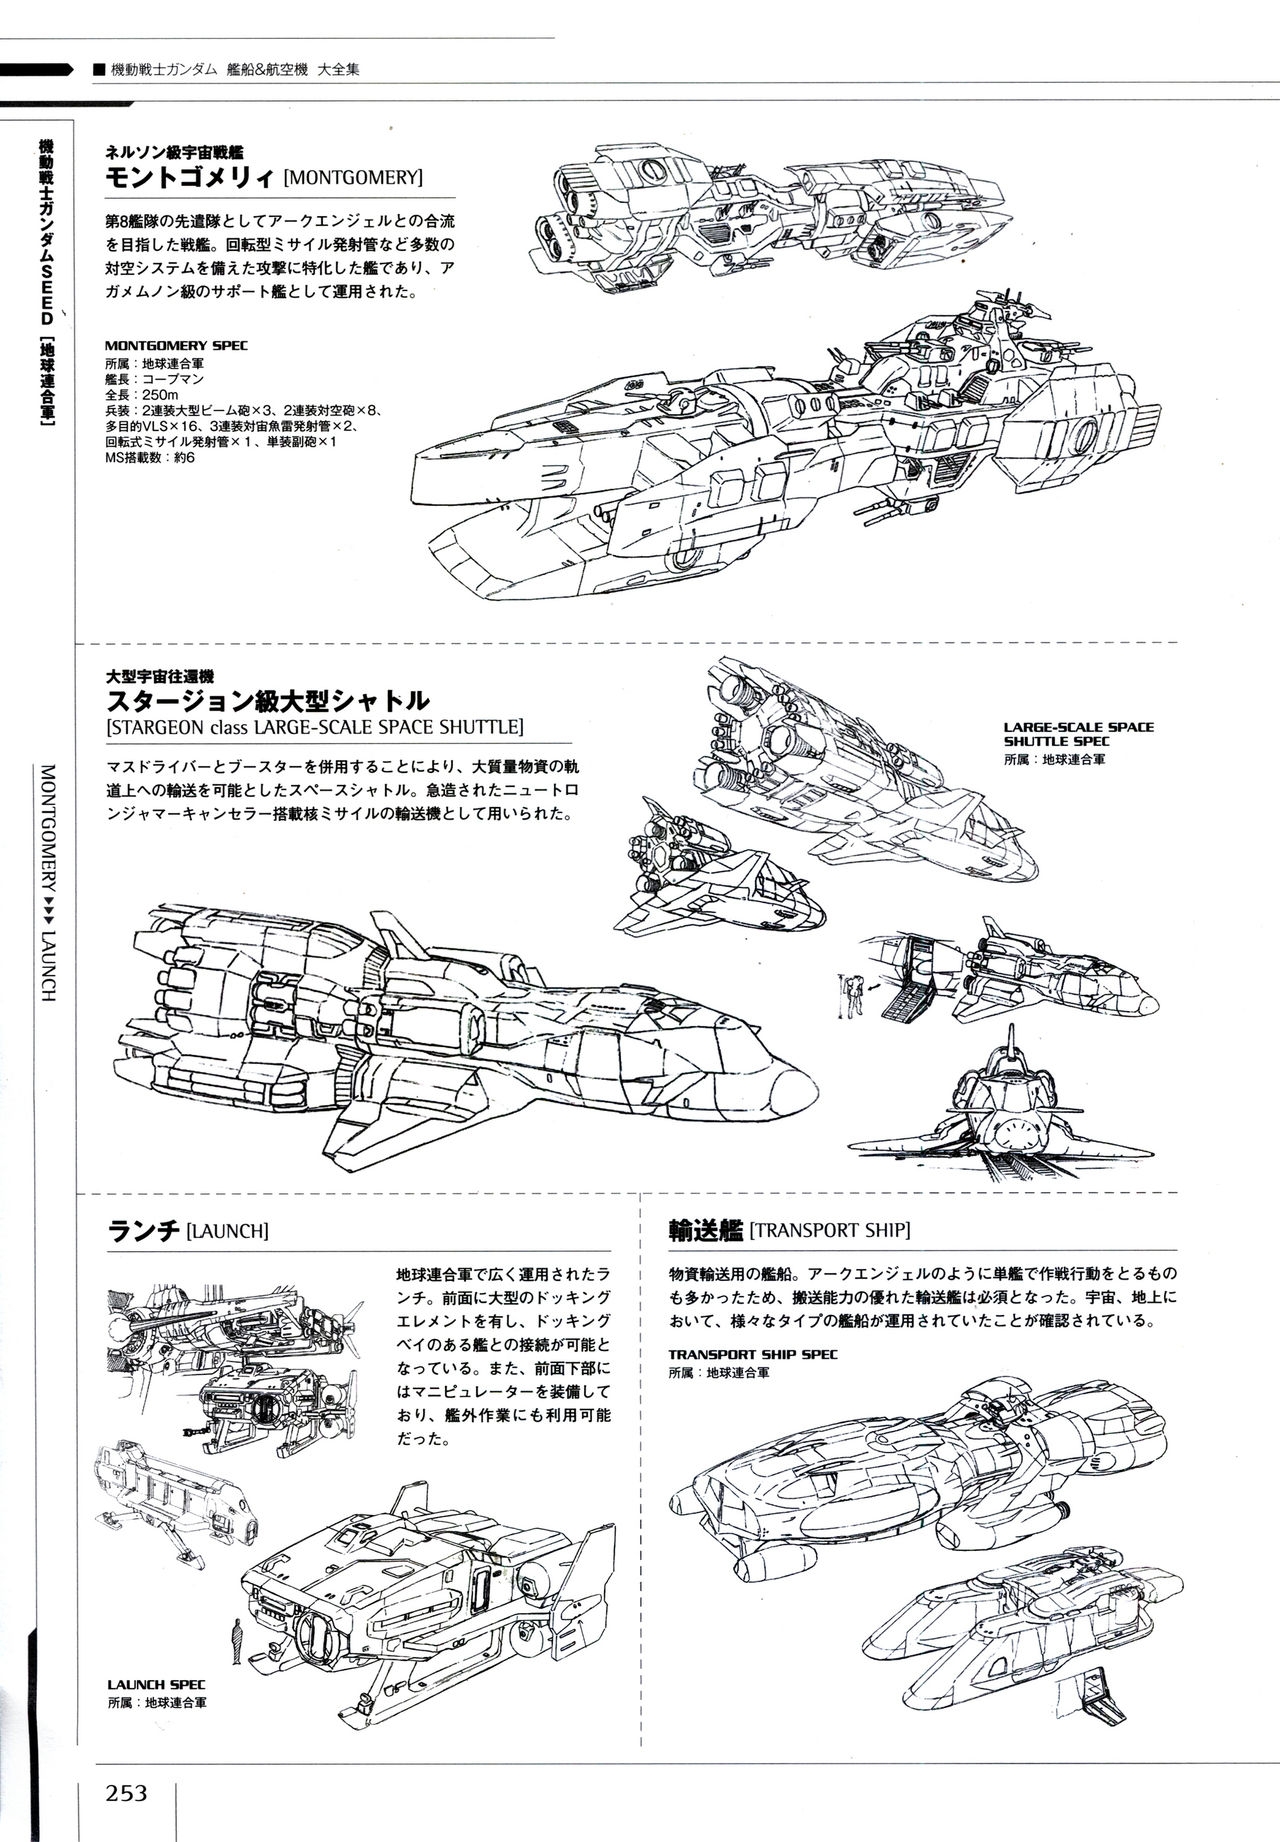 Mobile Suit Gundam - Ship & Aerospace Plane Encyclopedia - Revised Edition 258